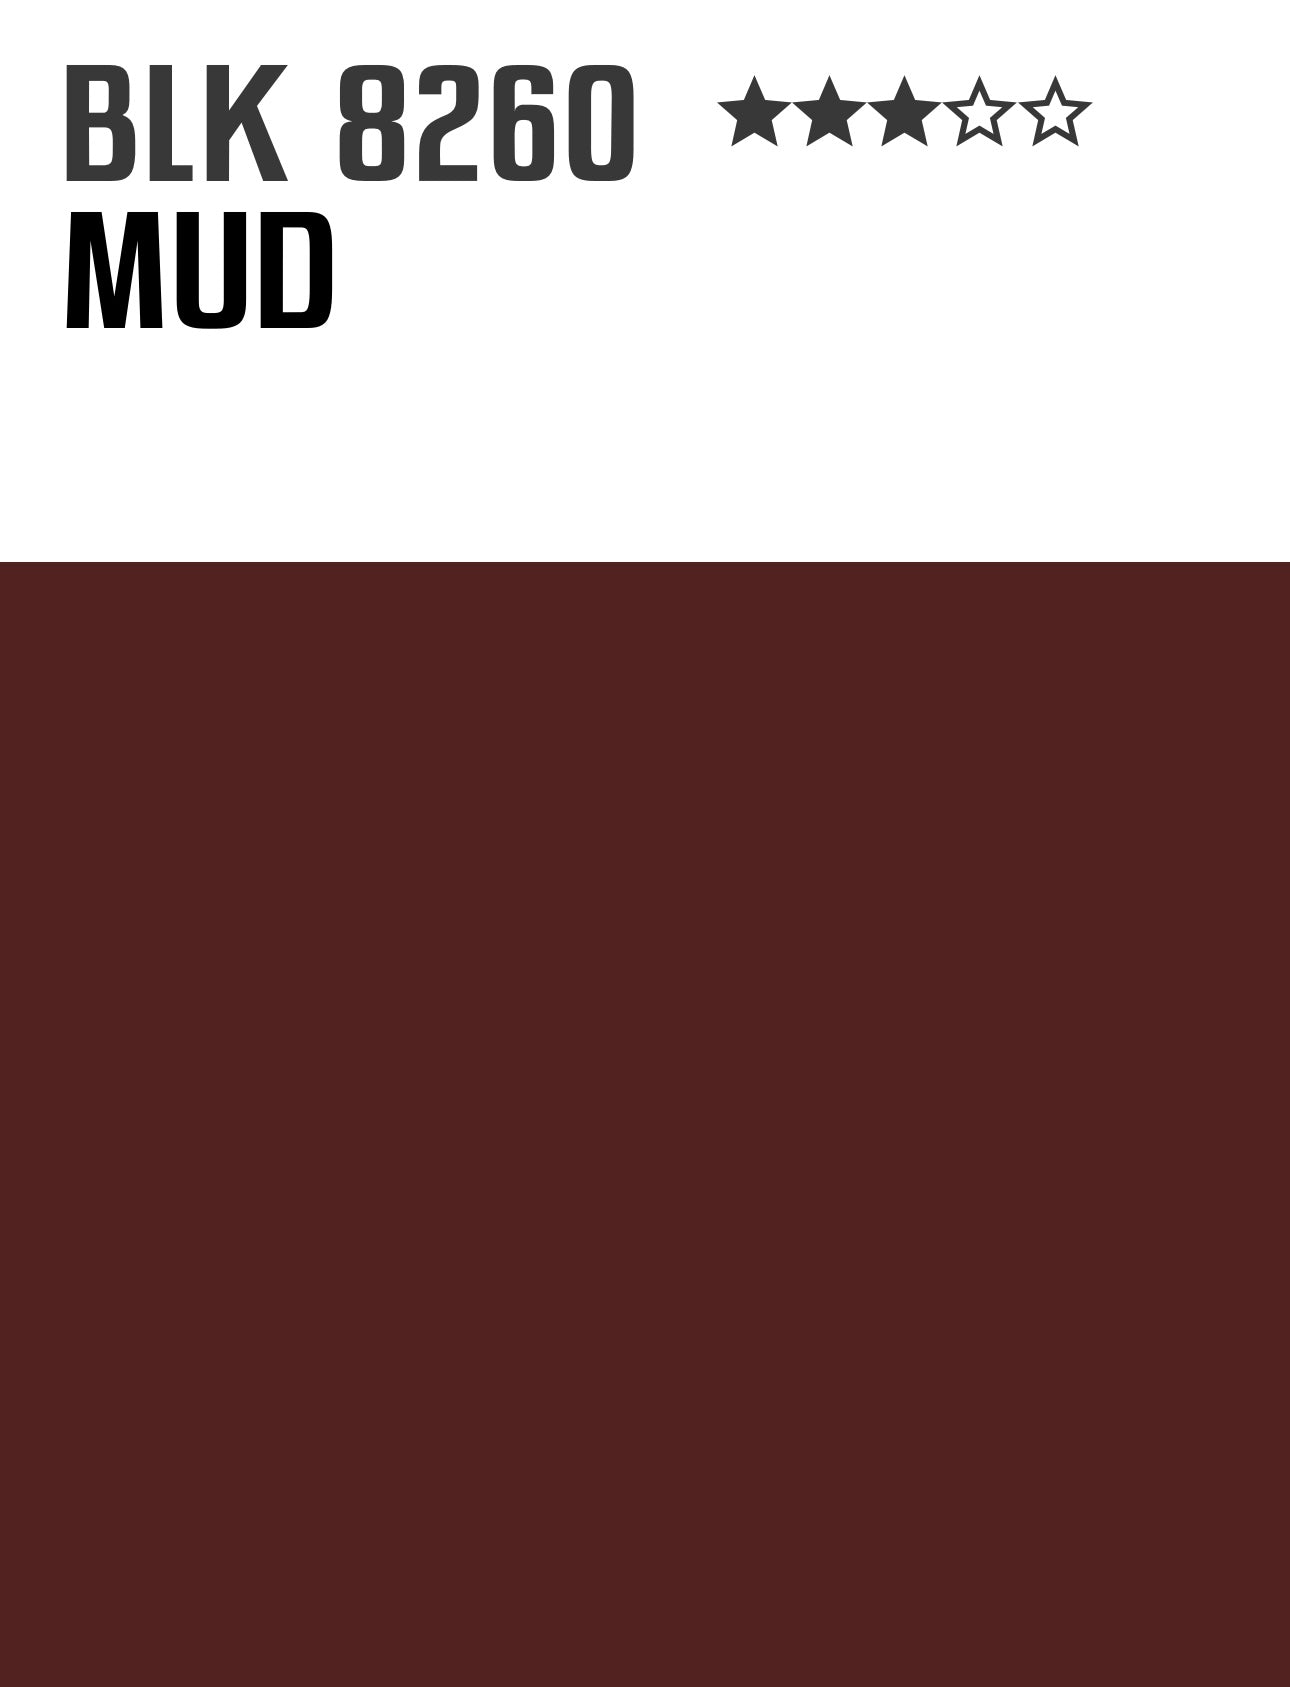 mud-montanablack